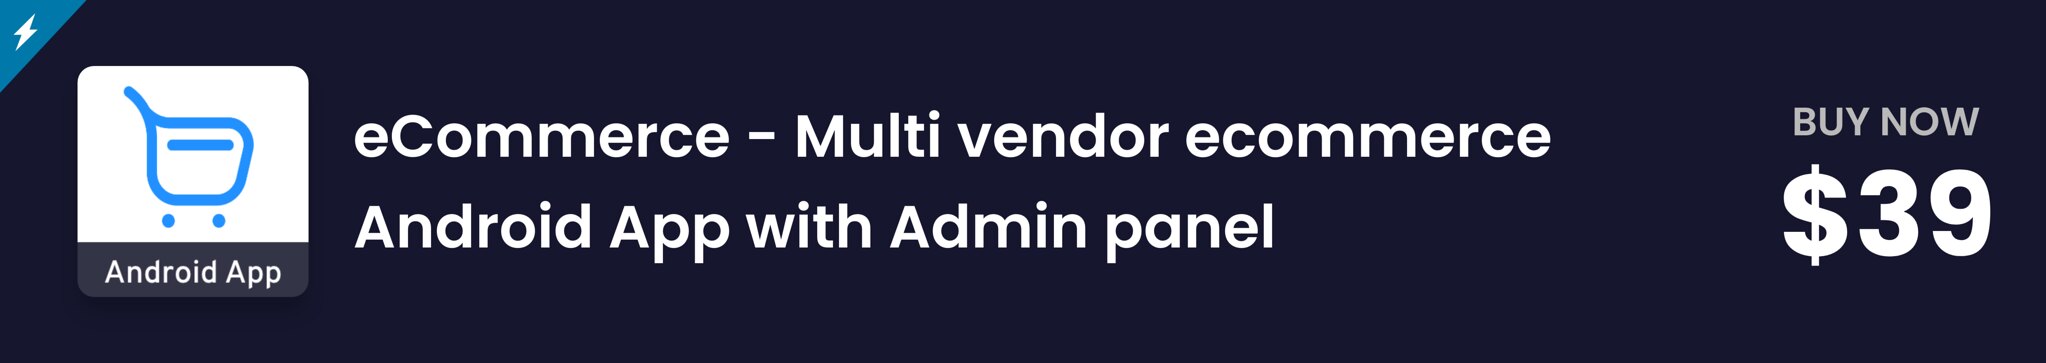 eCommerce - Multi vendor ecommerce iOS App with Admin panel - 2